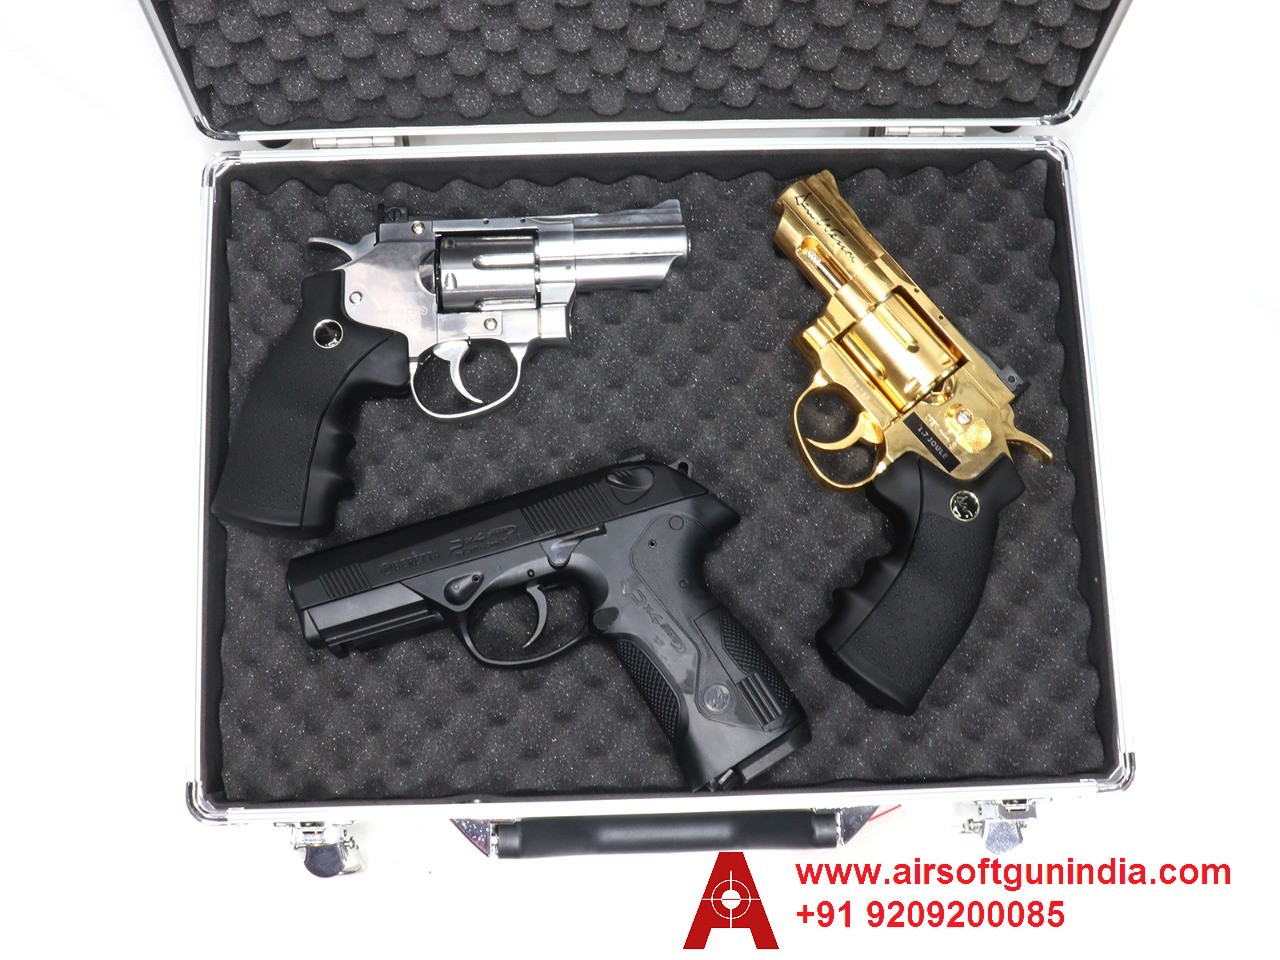 Airsoft Gun India Aluminium Gun Box For Multiple Gun